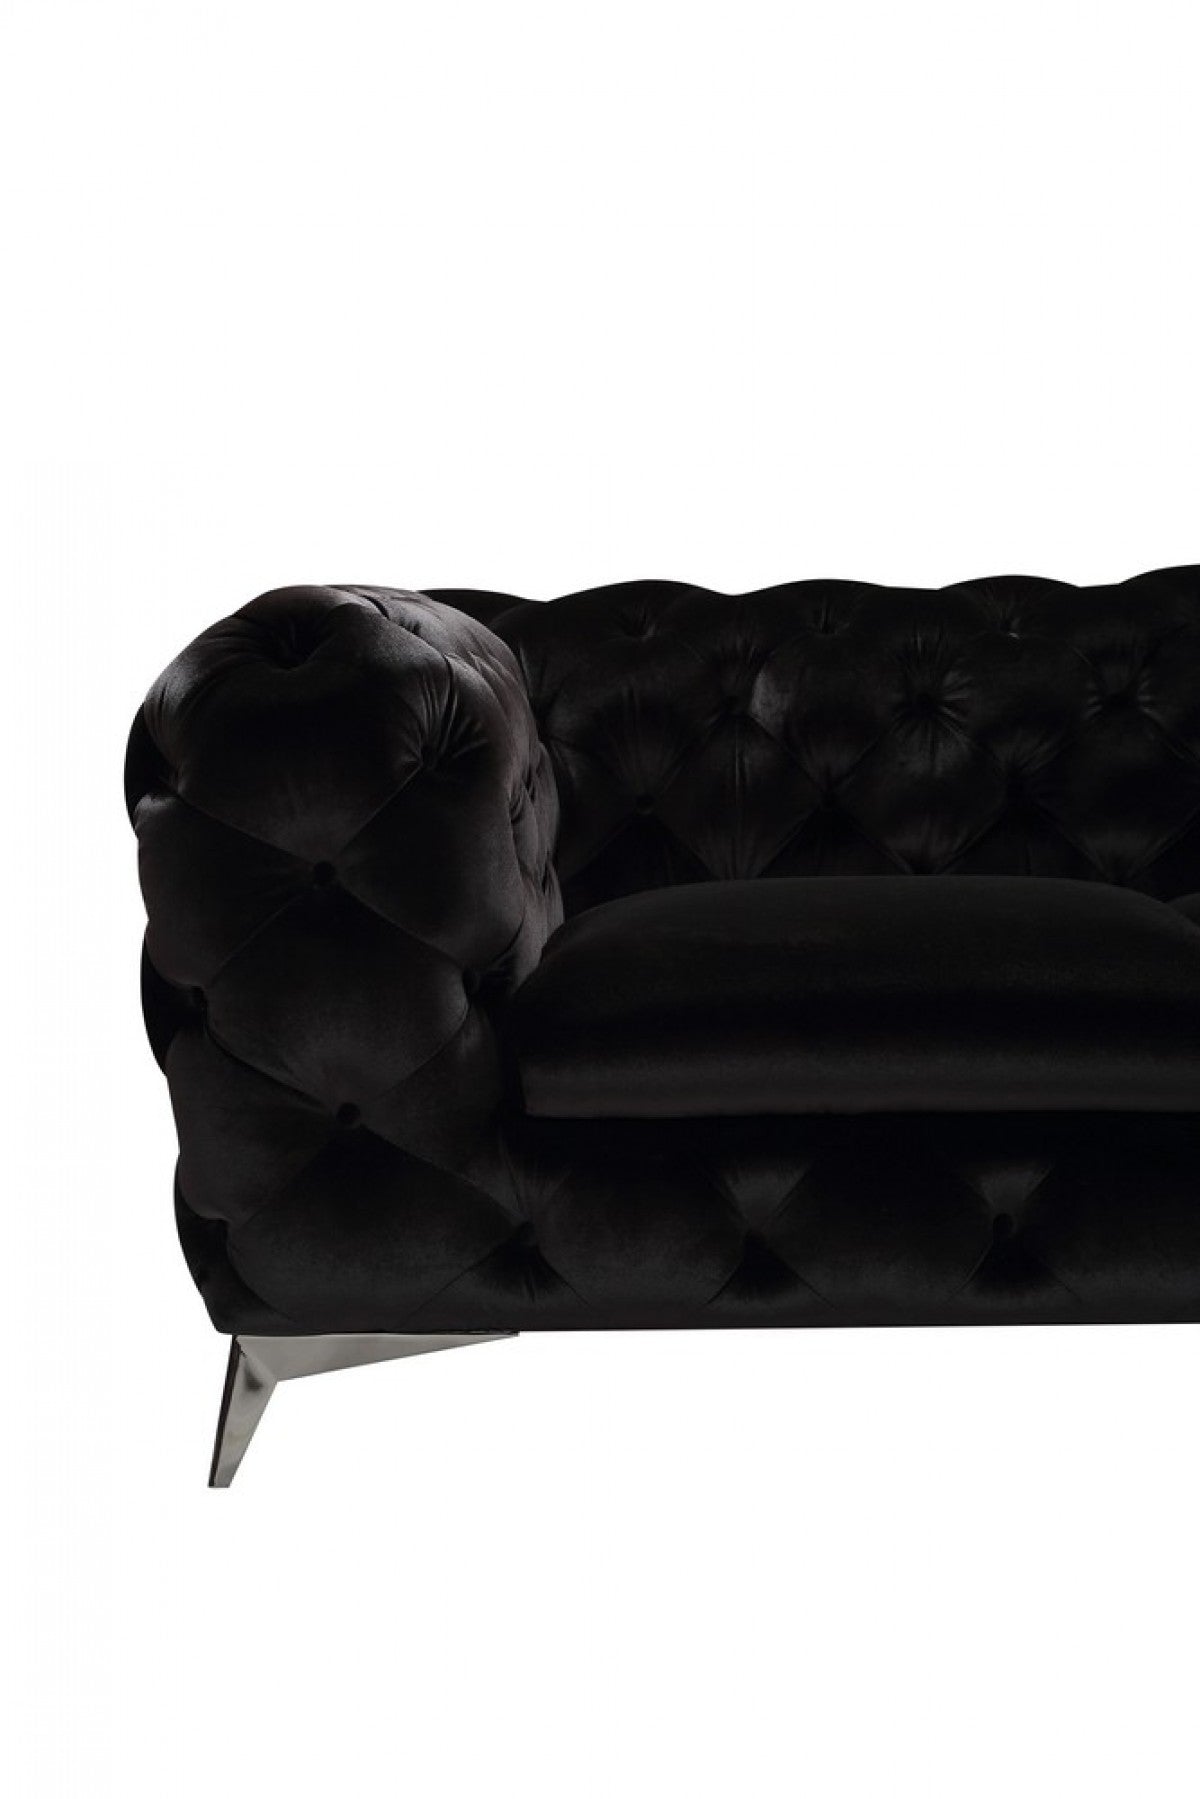 Divani Casa Delilah - Modern Black Fabric Sectional Sofa